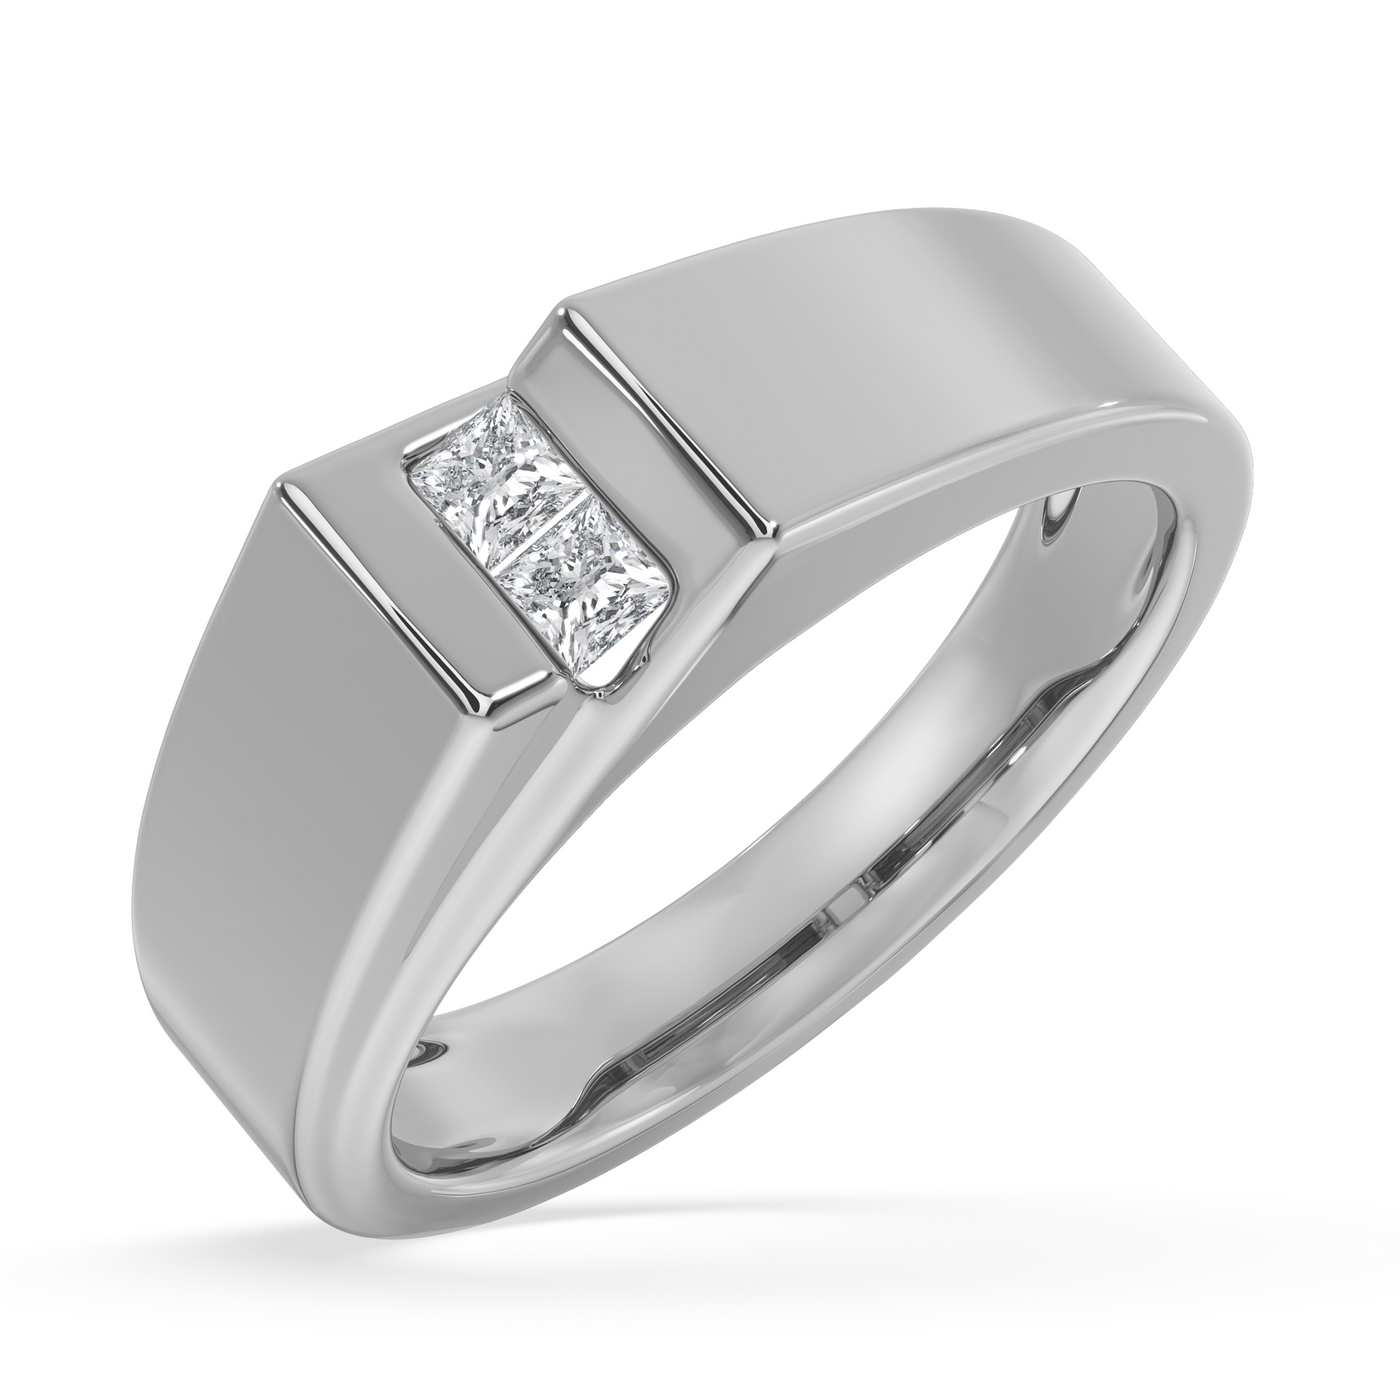 SY Men's Ring in Platinum, Masterpiece of Simplicity